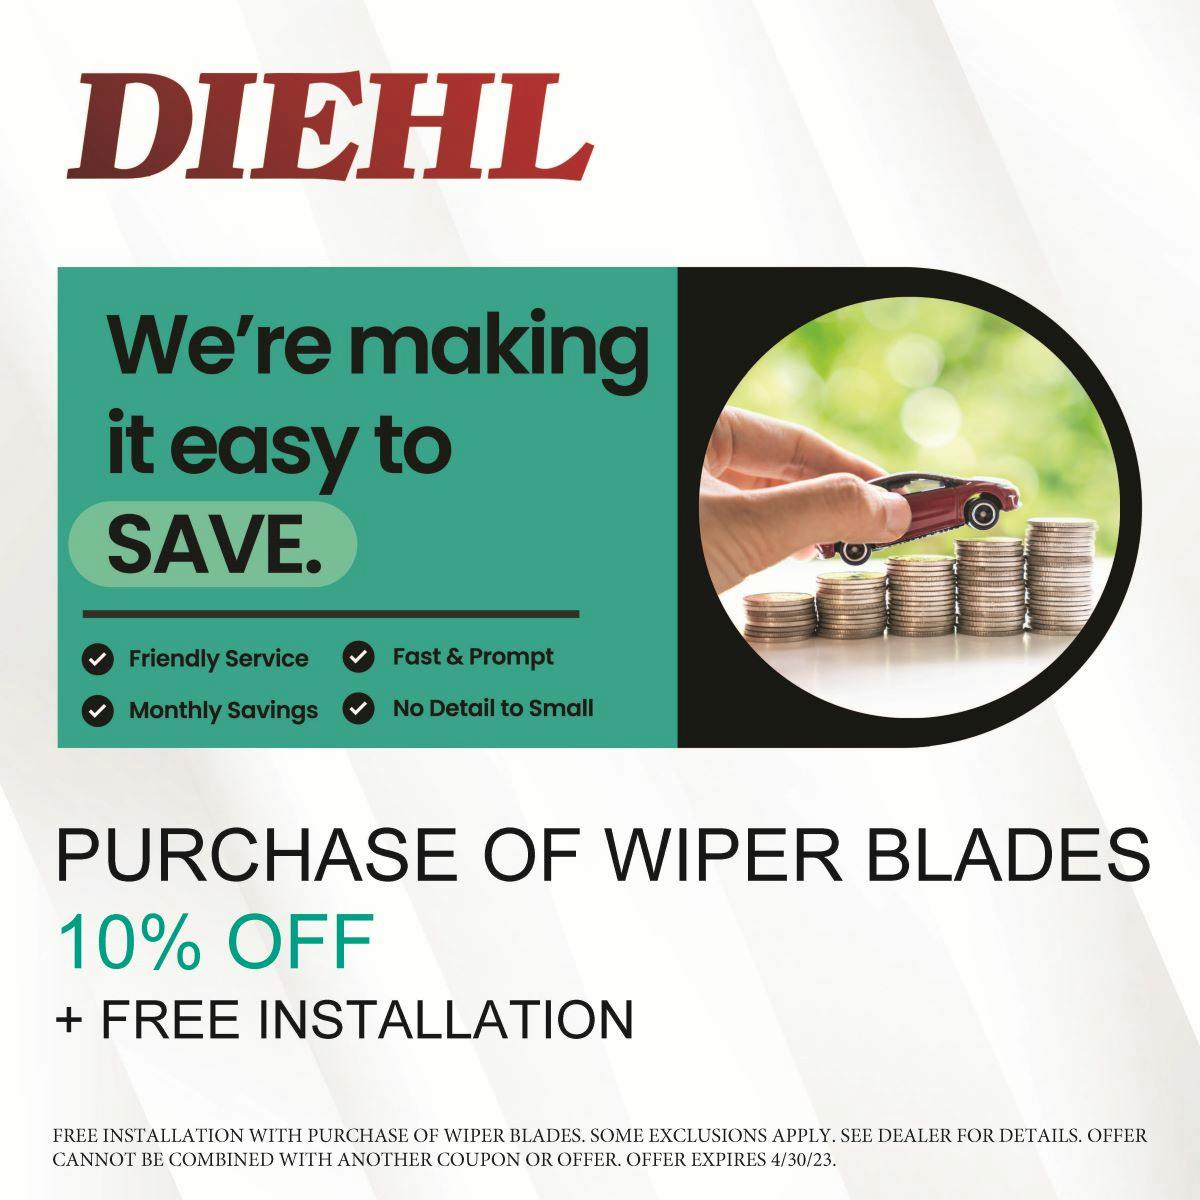 Wiper Blades | Diehl Mitsubishi of Massillon